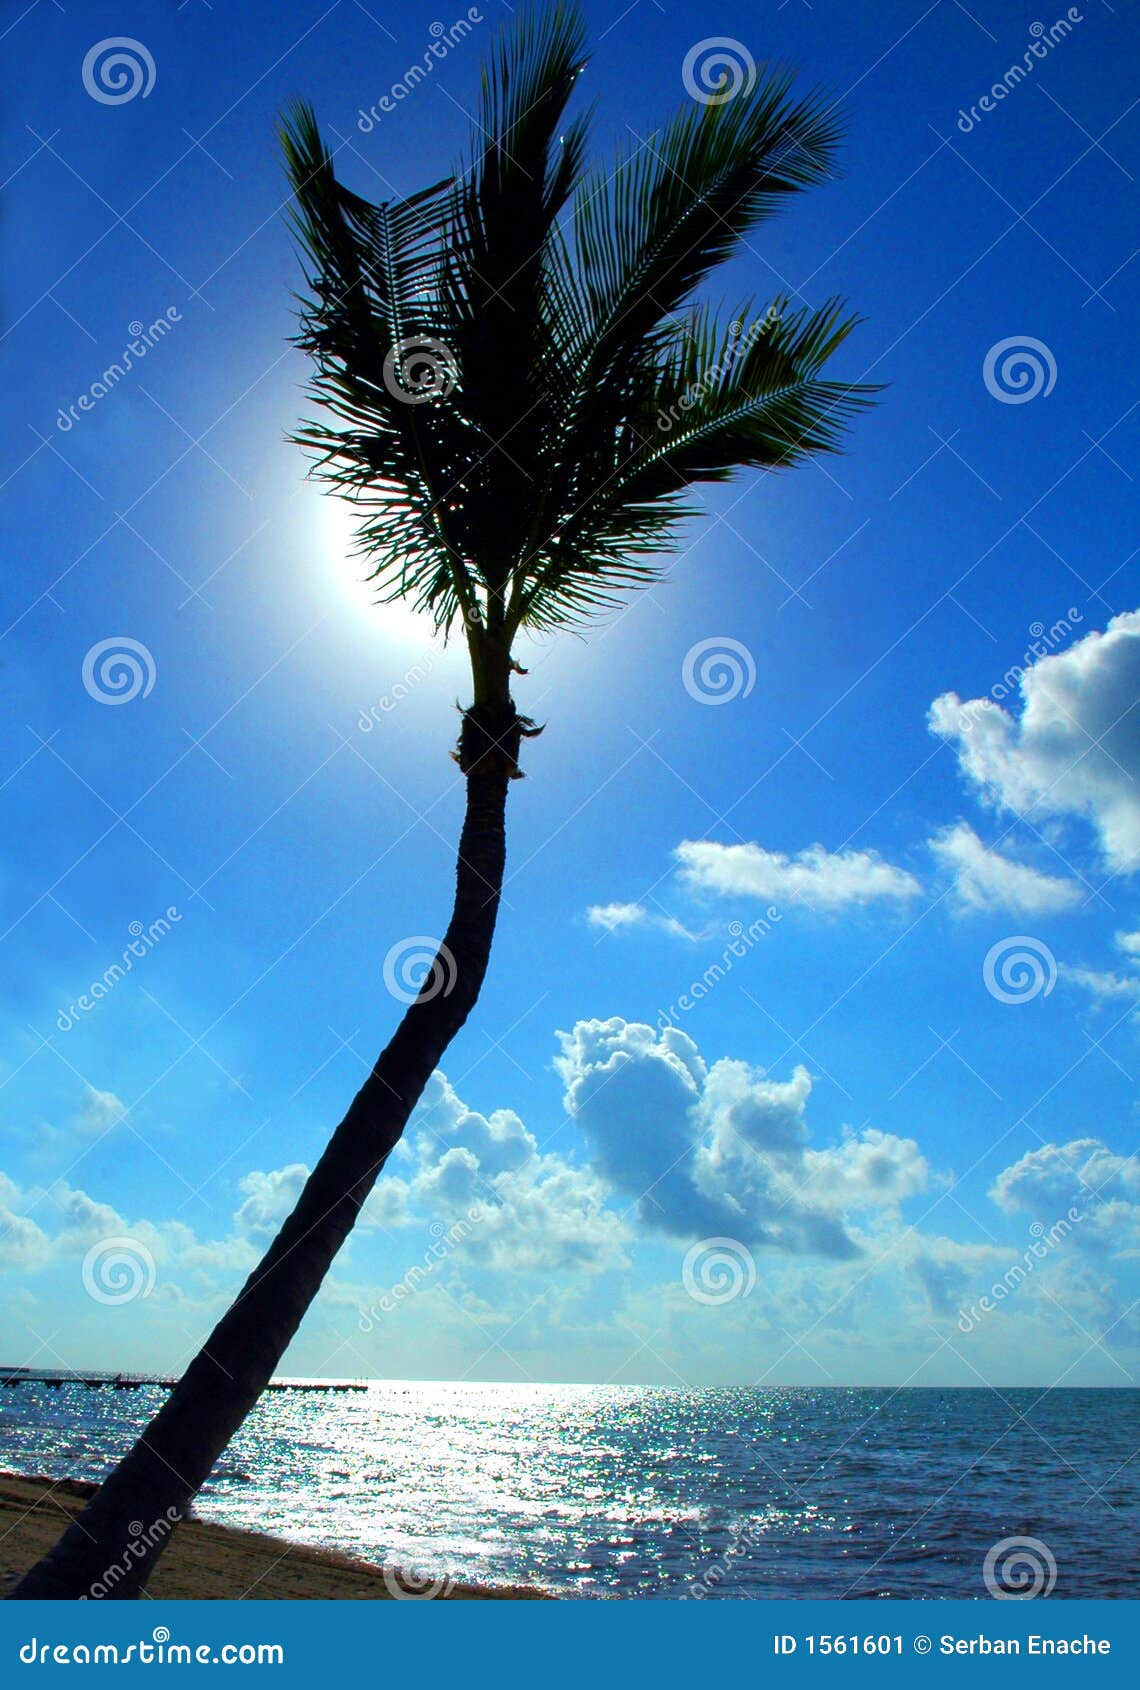 back lit palm tree